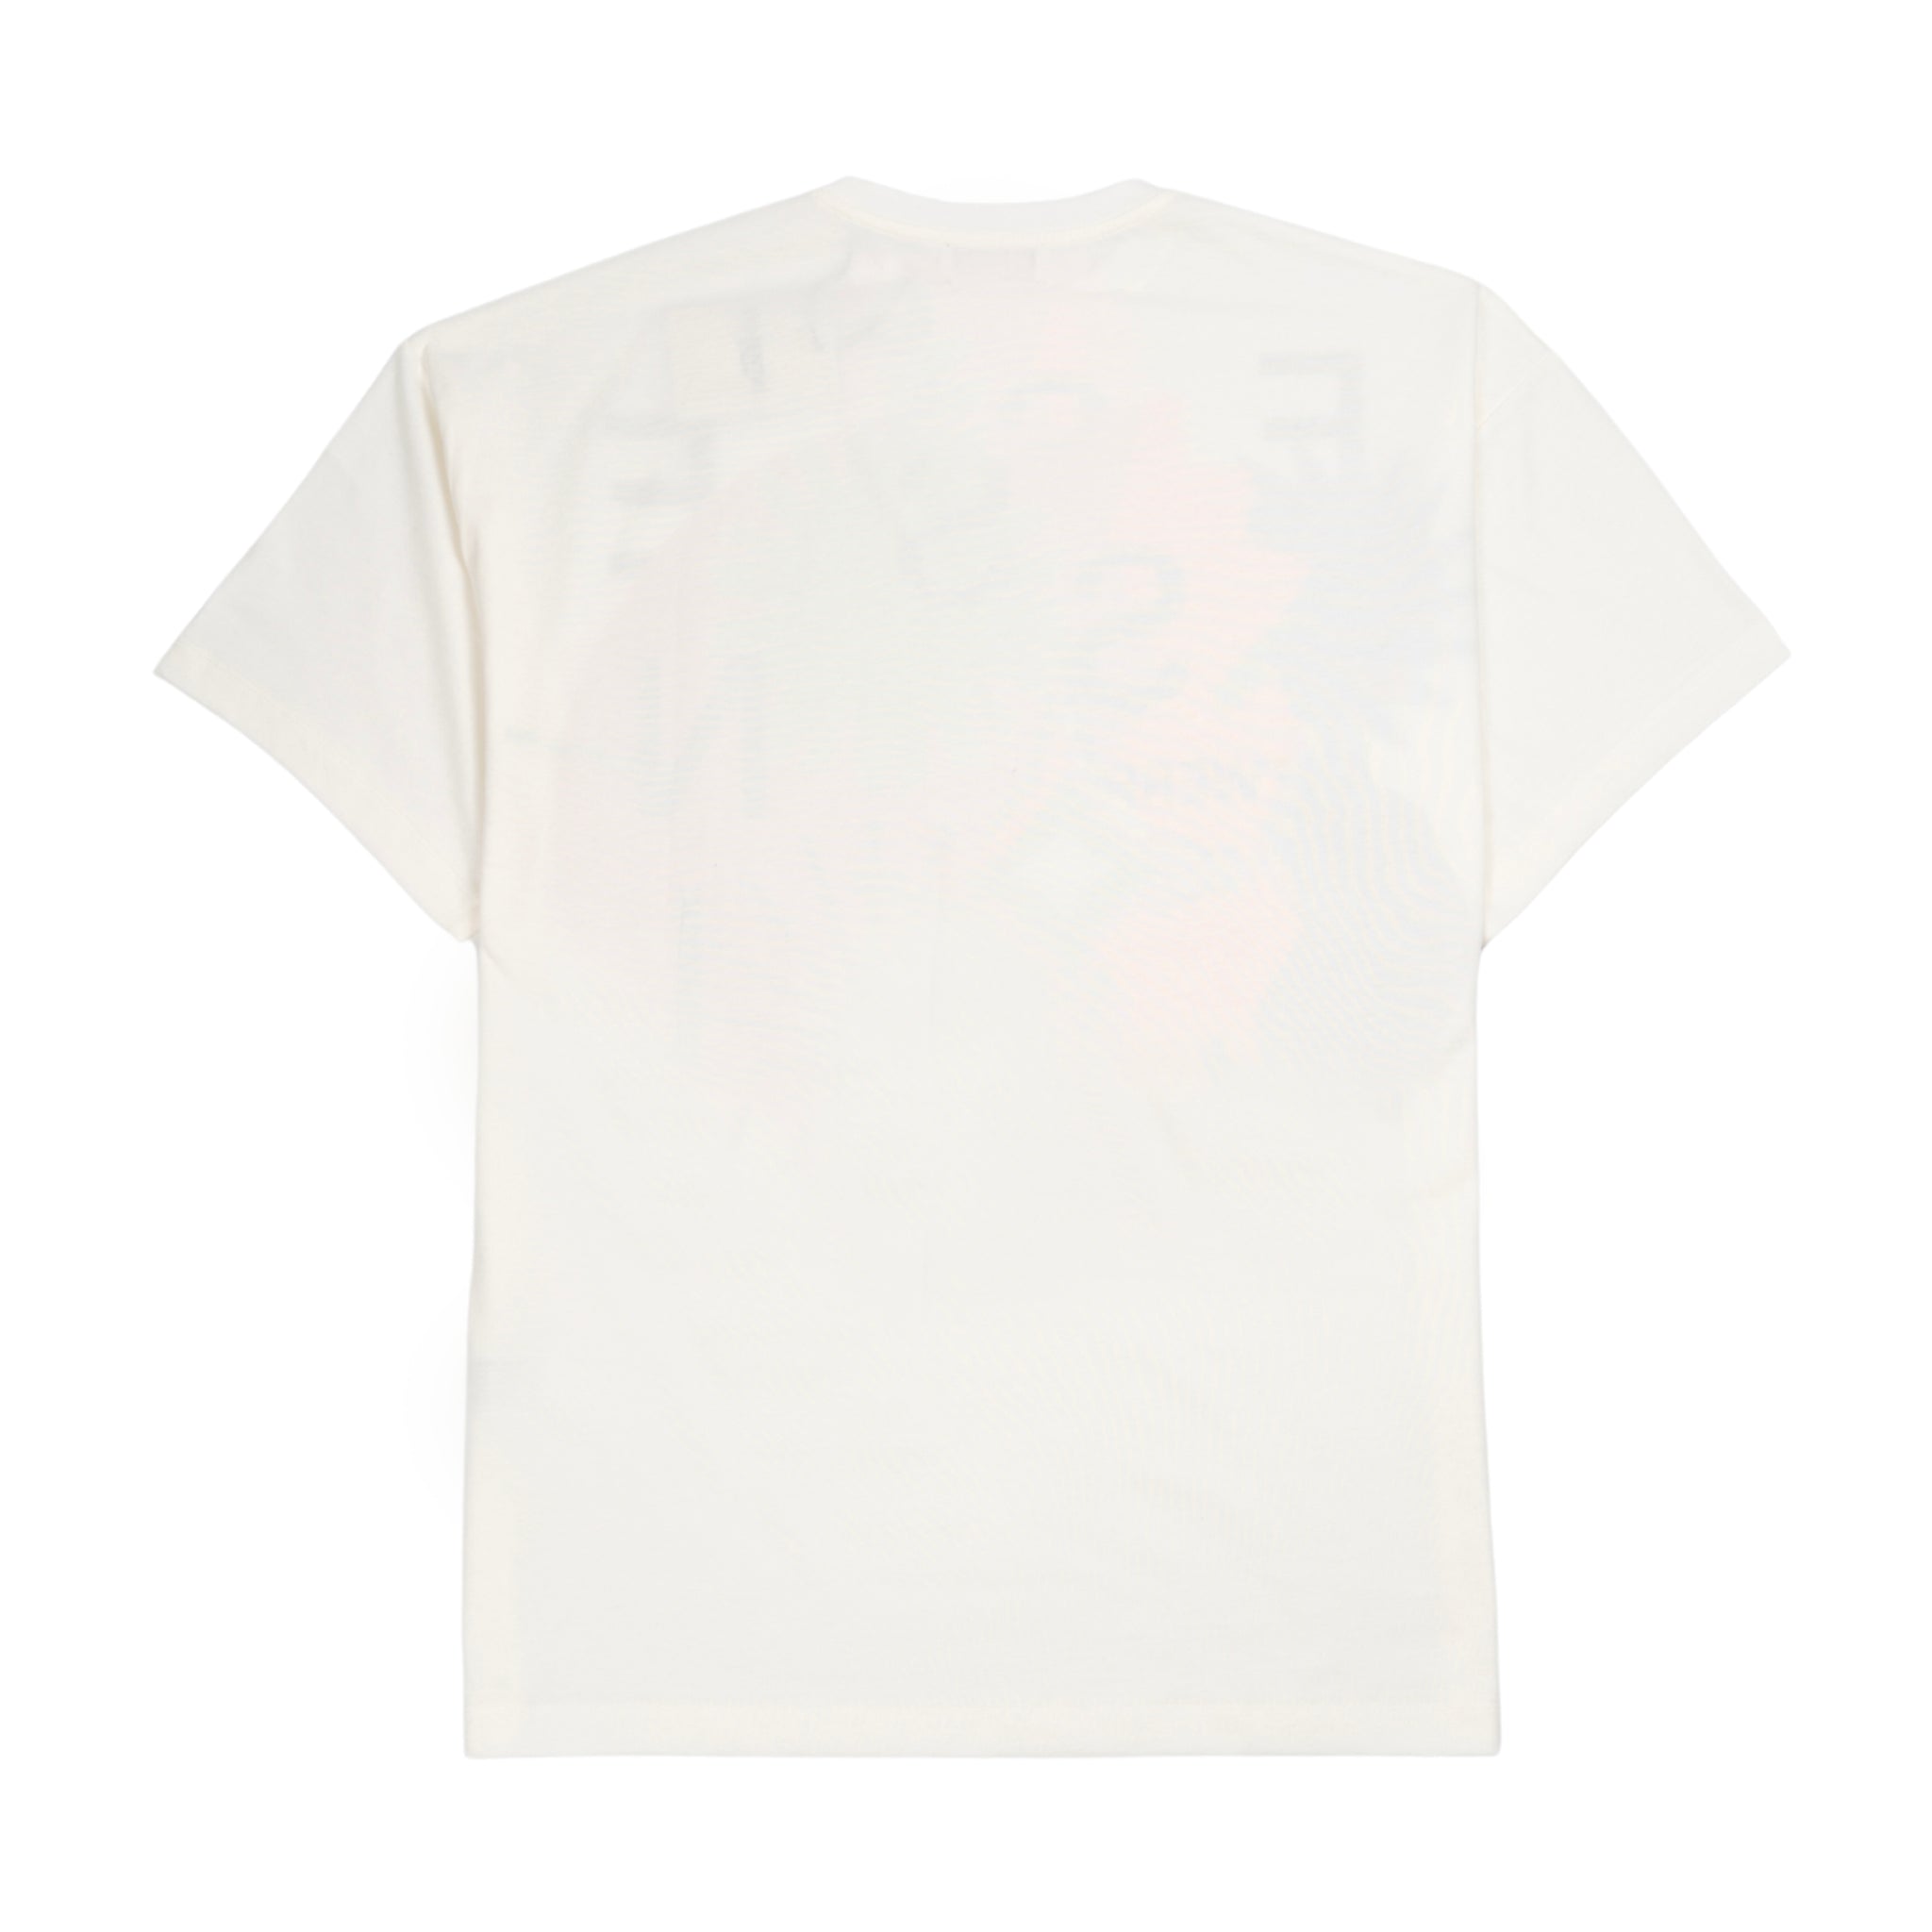 Foglia t-shirt stampata in bianco sporco